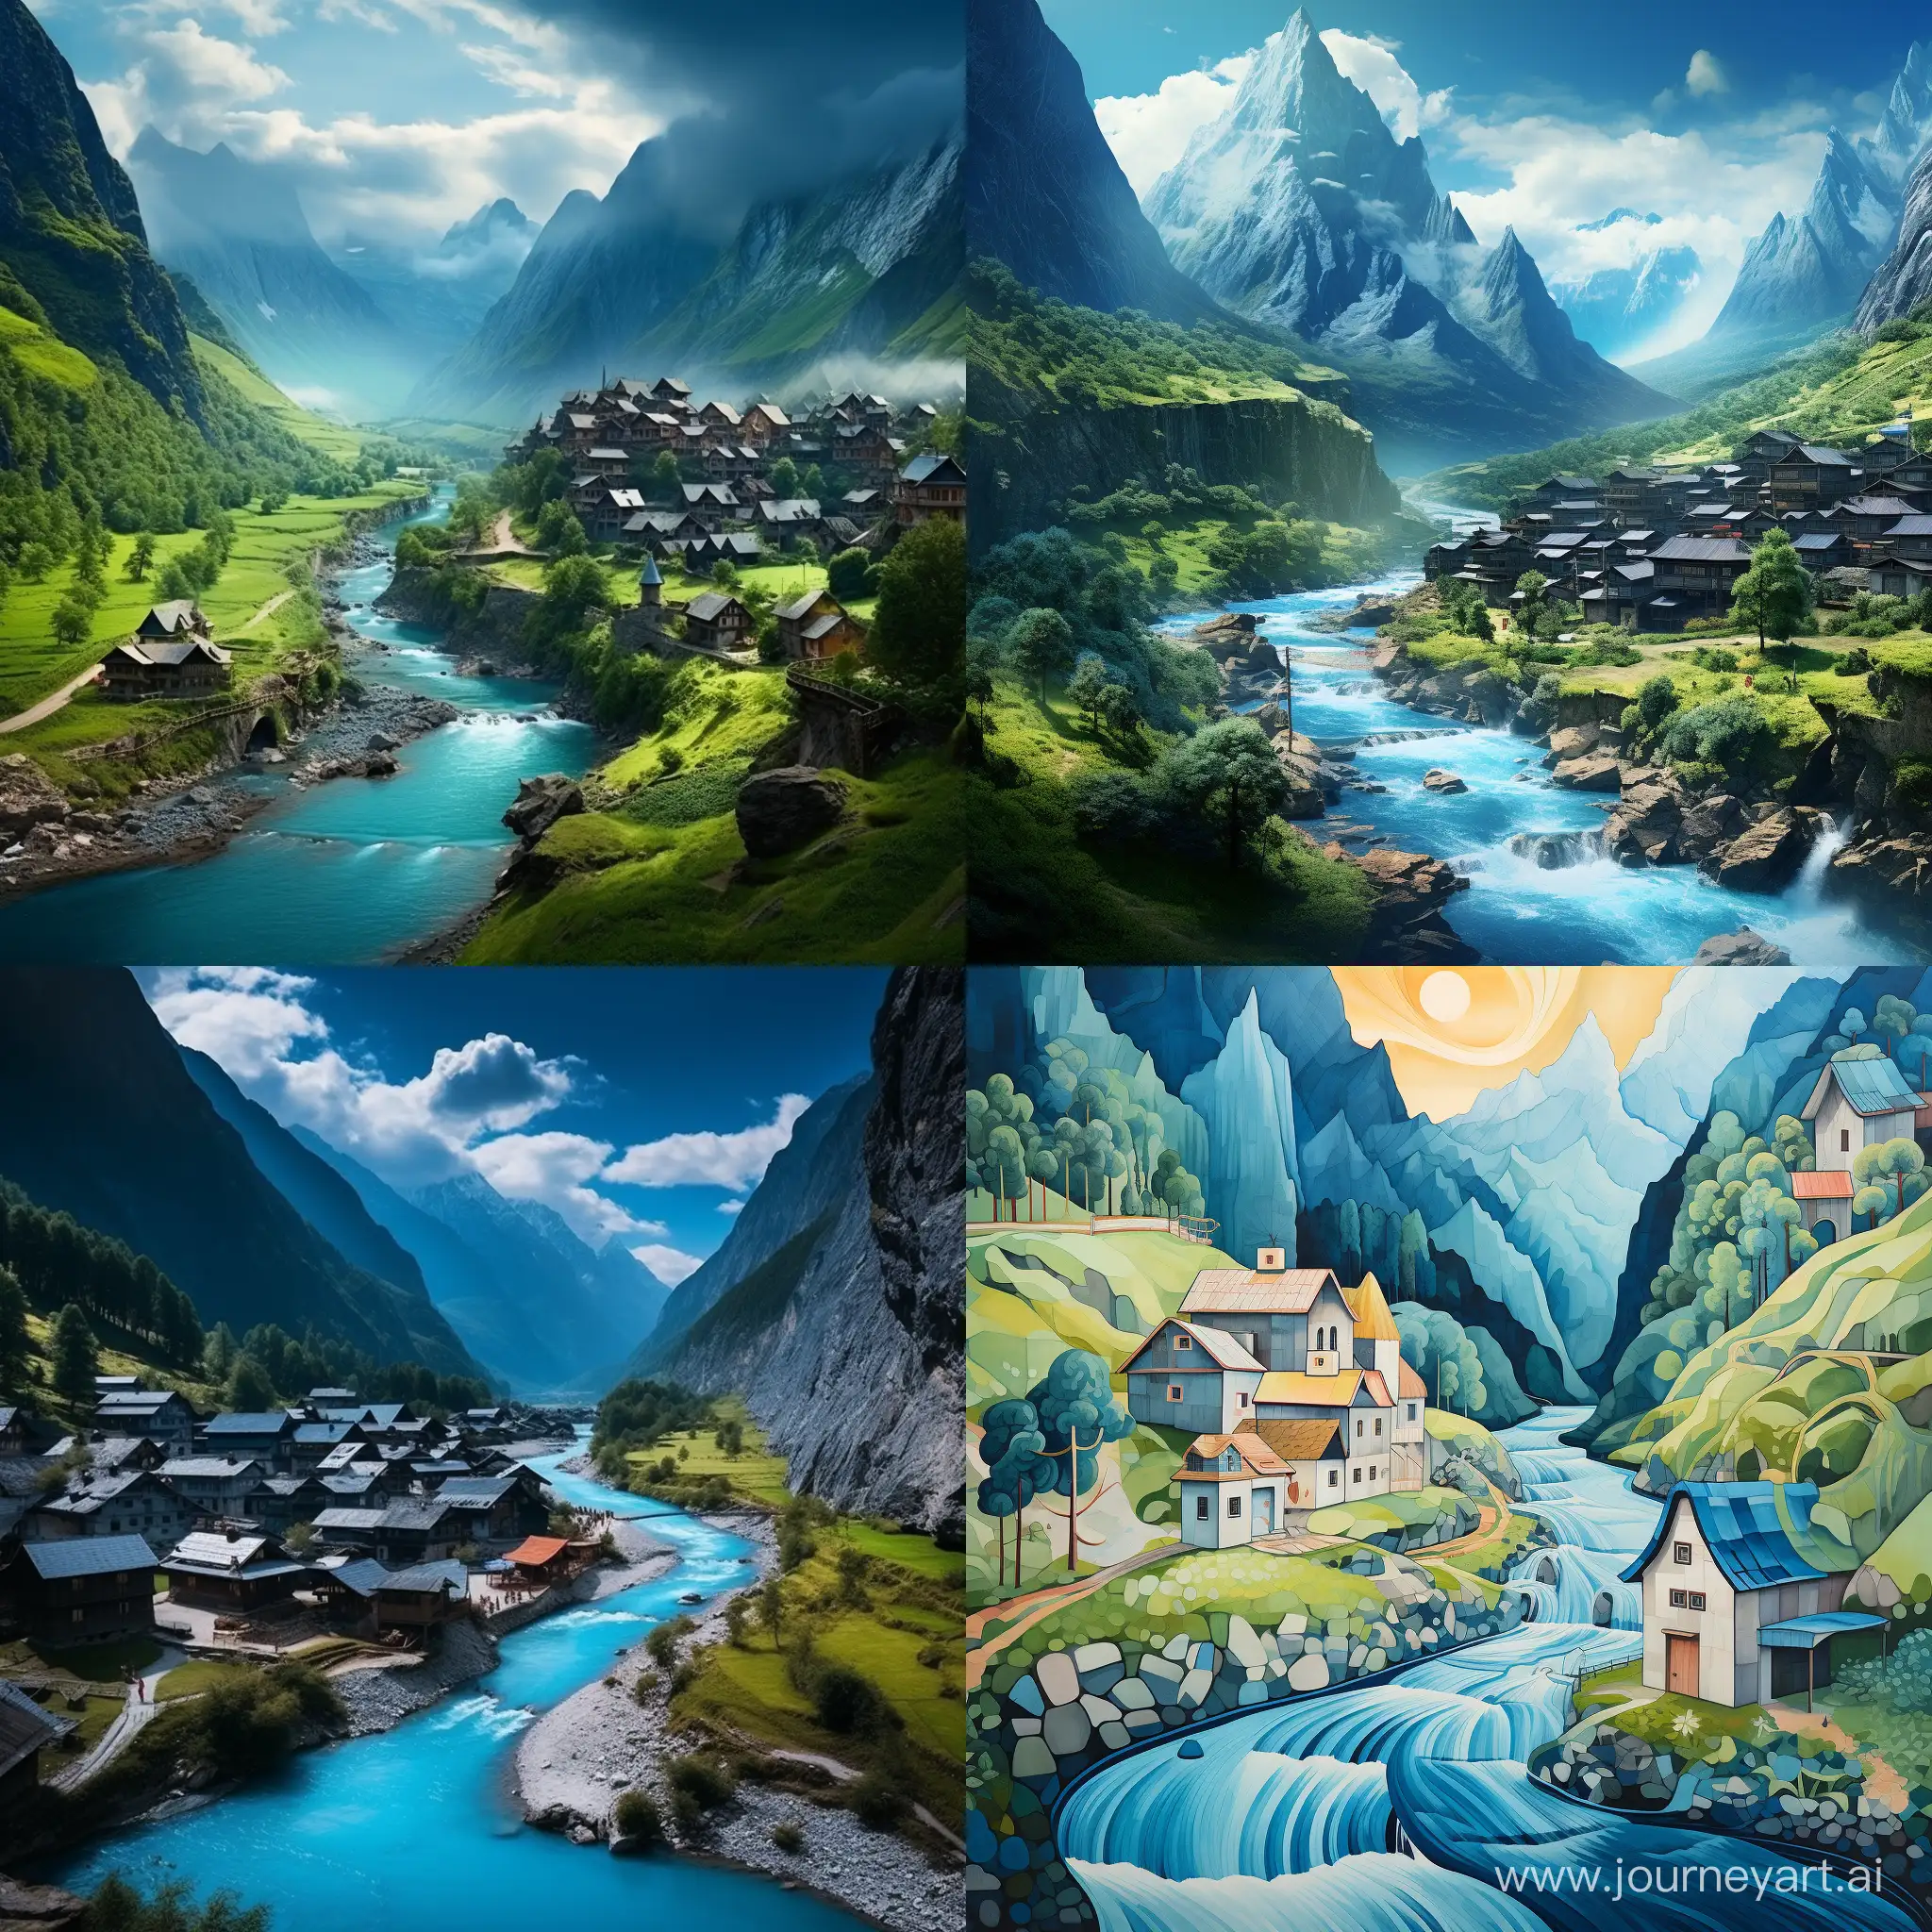 Mountain-Village-Landscape-with-Serene-Blue-River